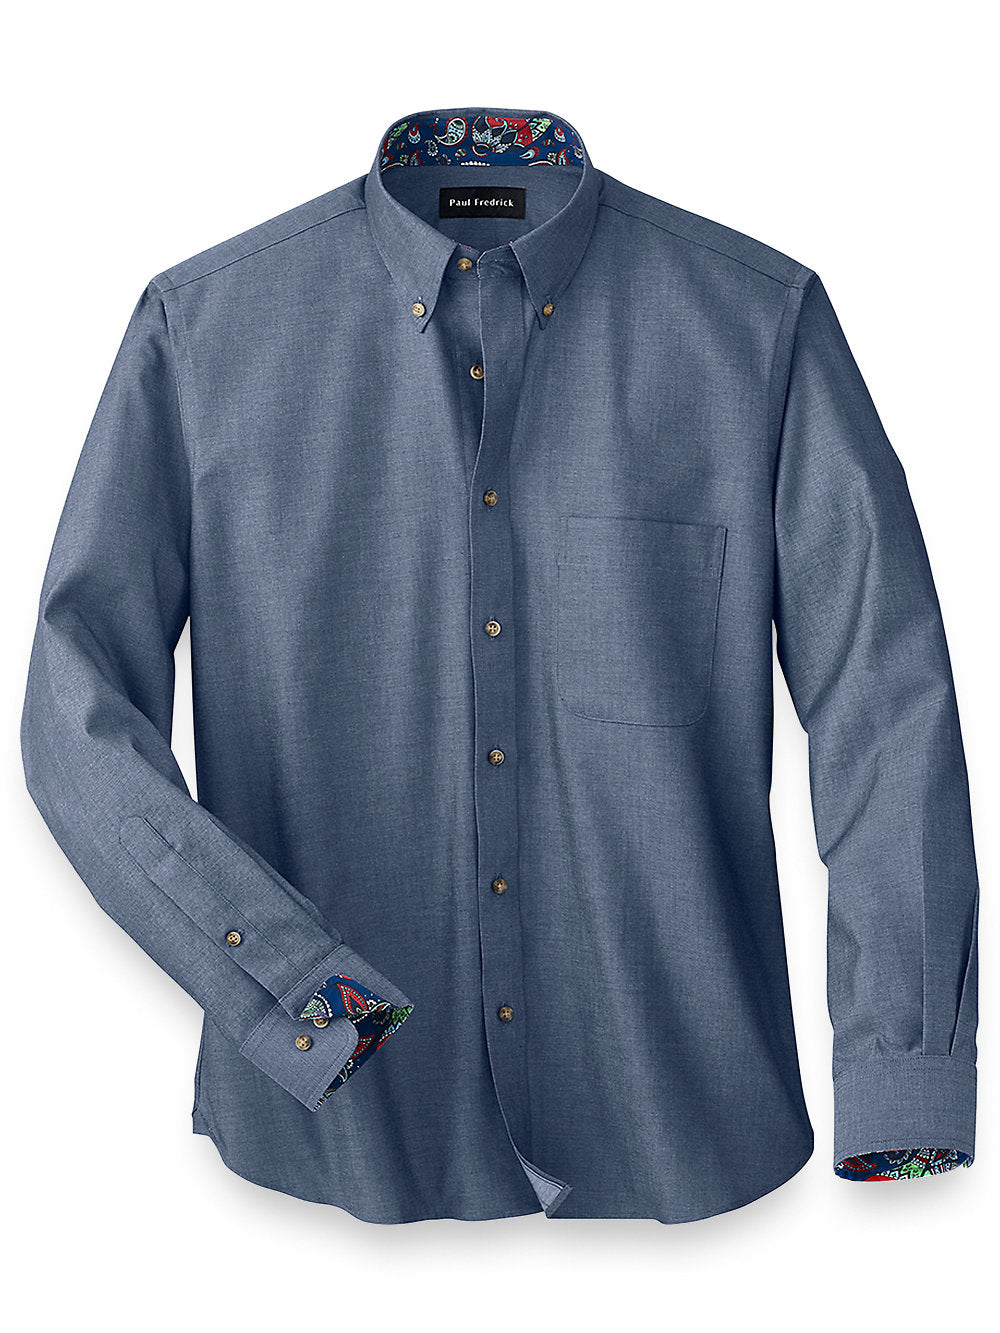 Men's Paul Fredrick Denim Blue With Floral Inside Design Shirt